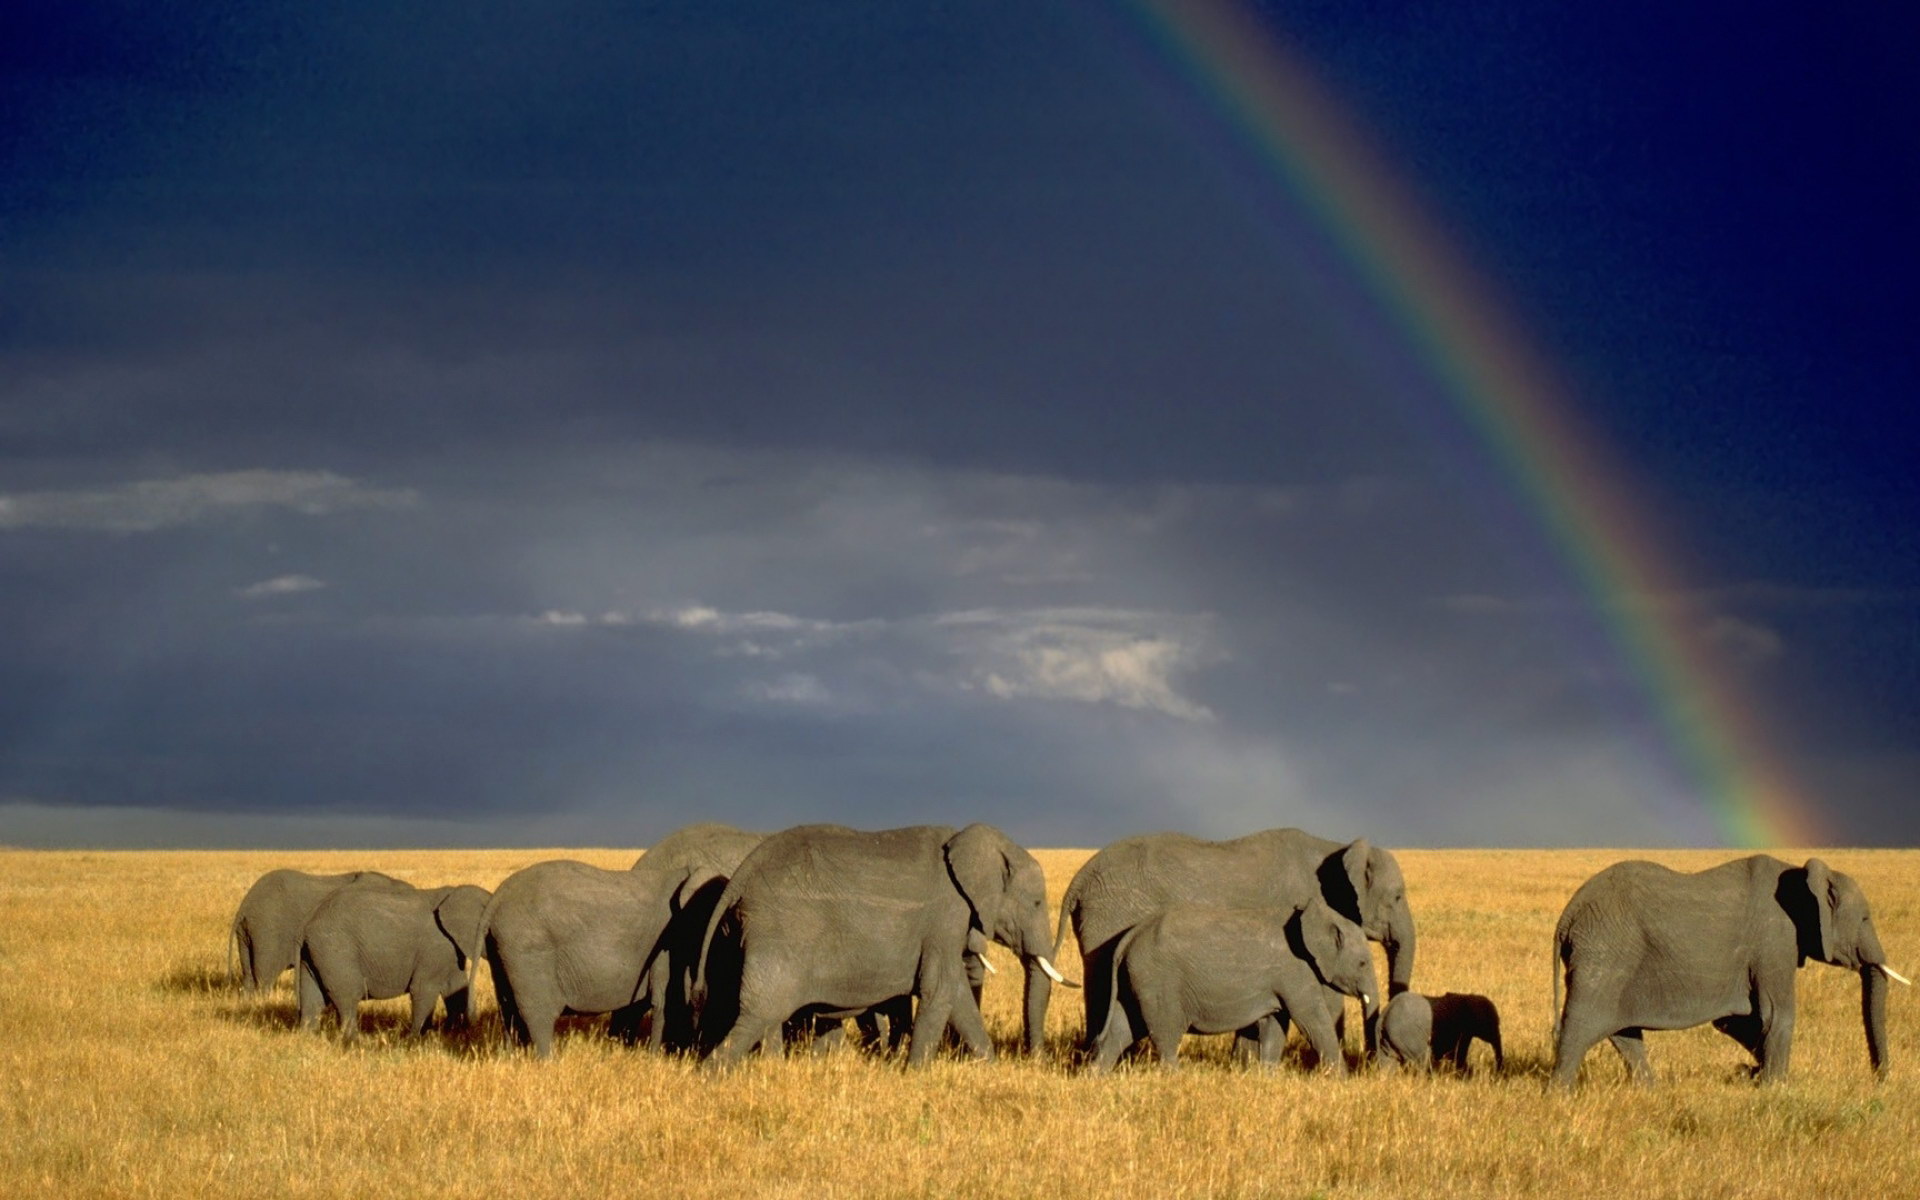 A herd of elephants and a rainbow